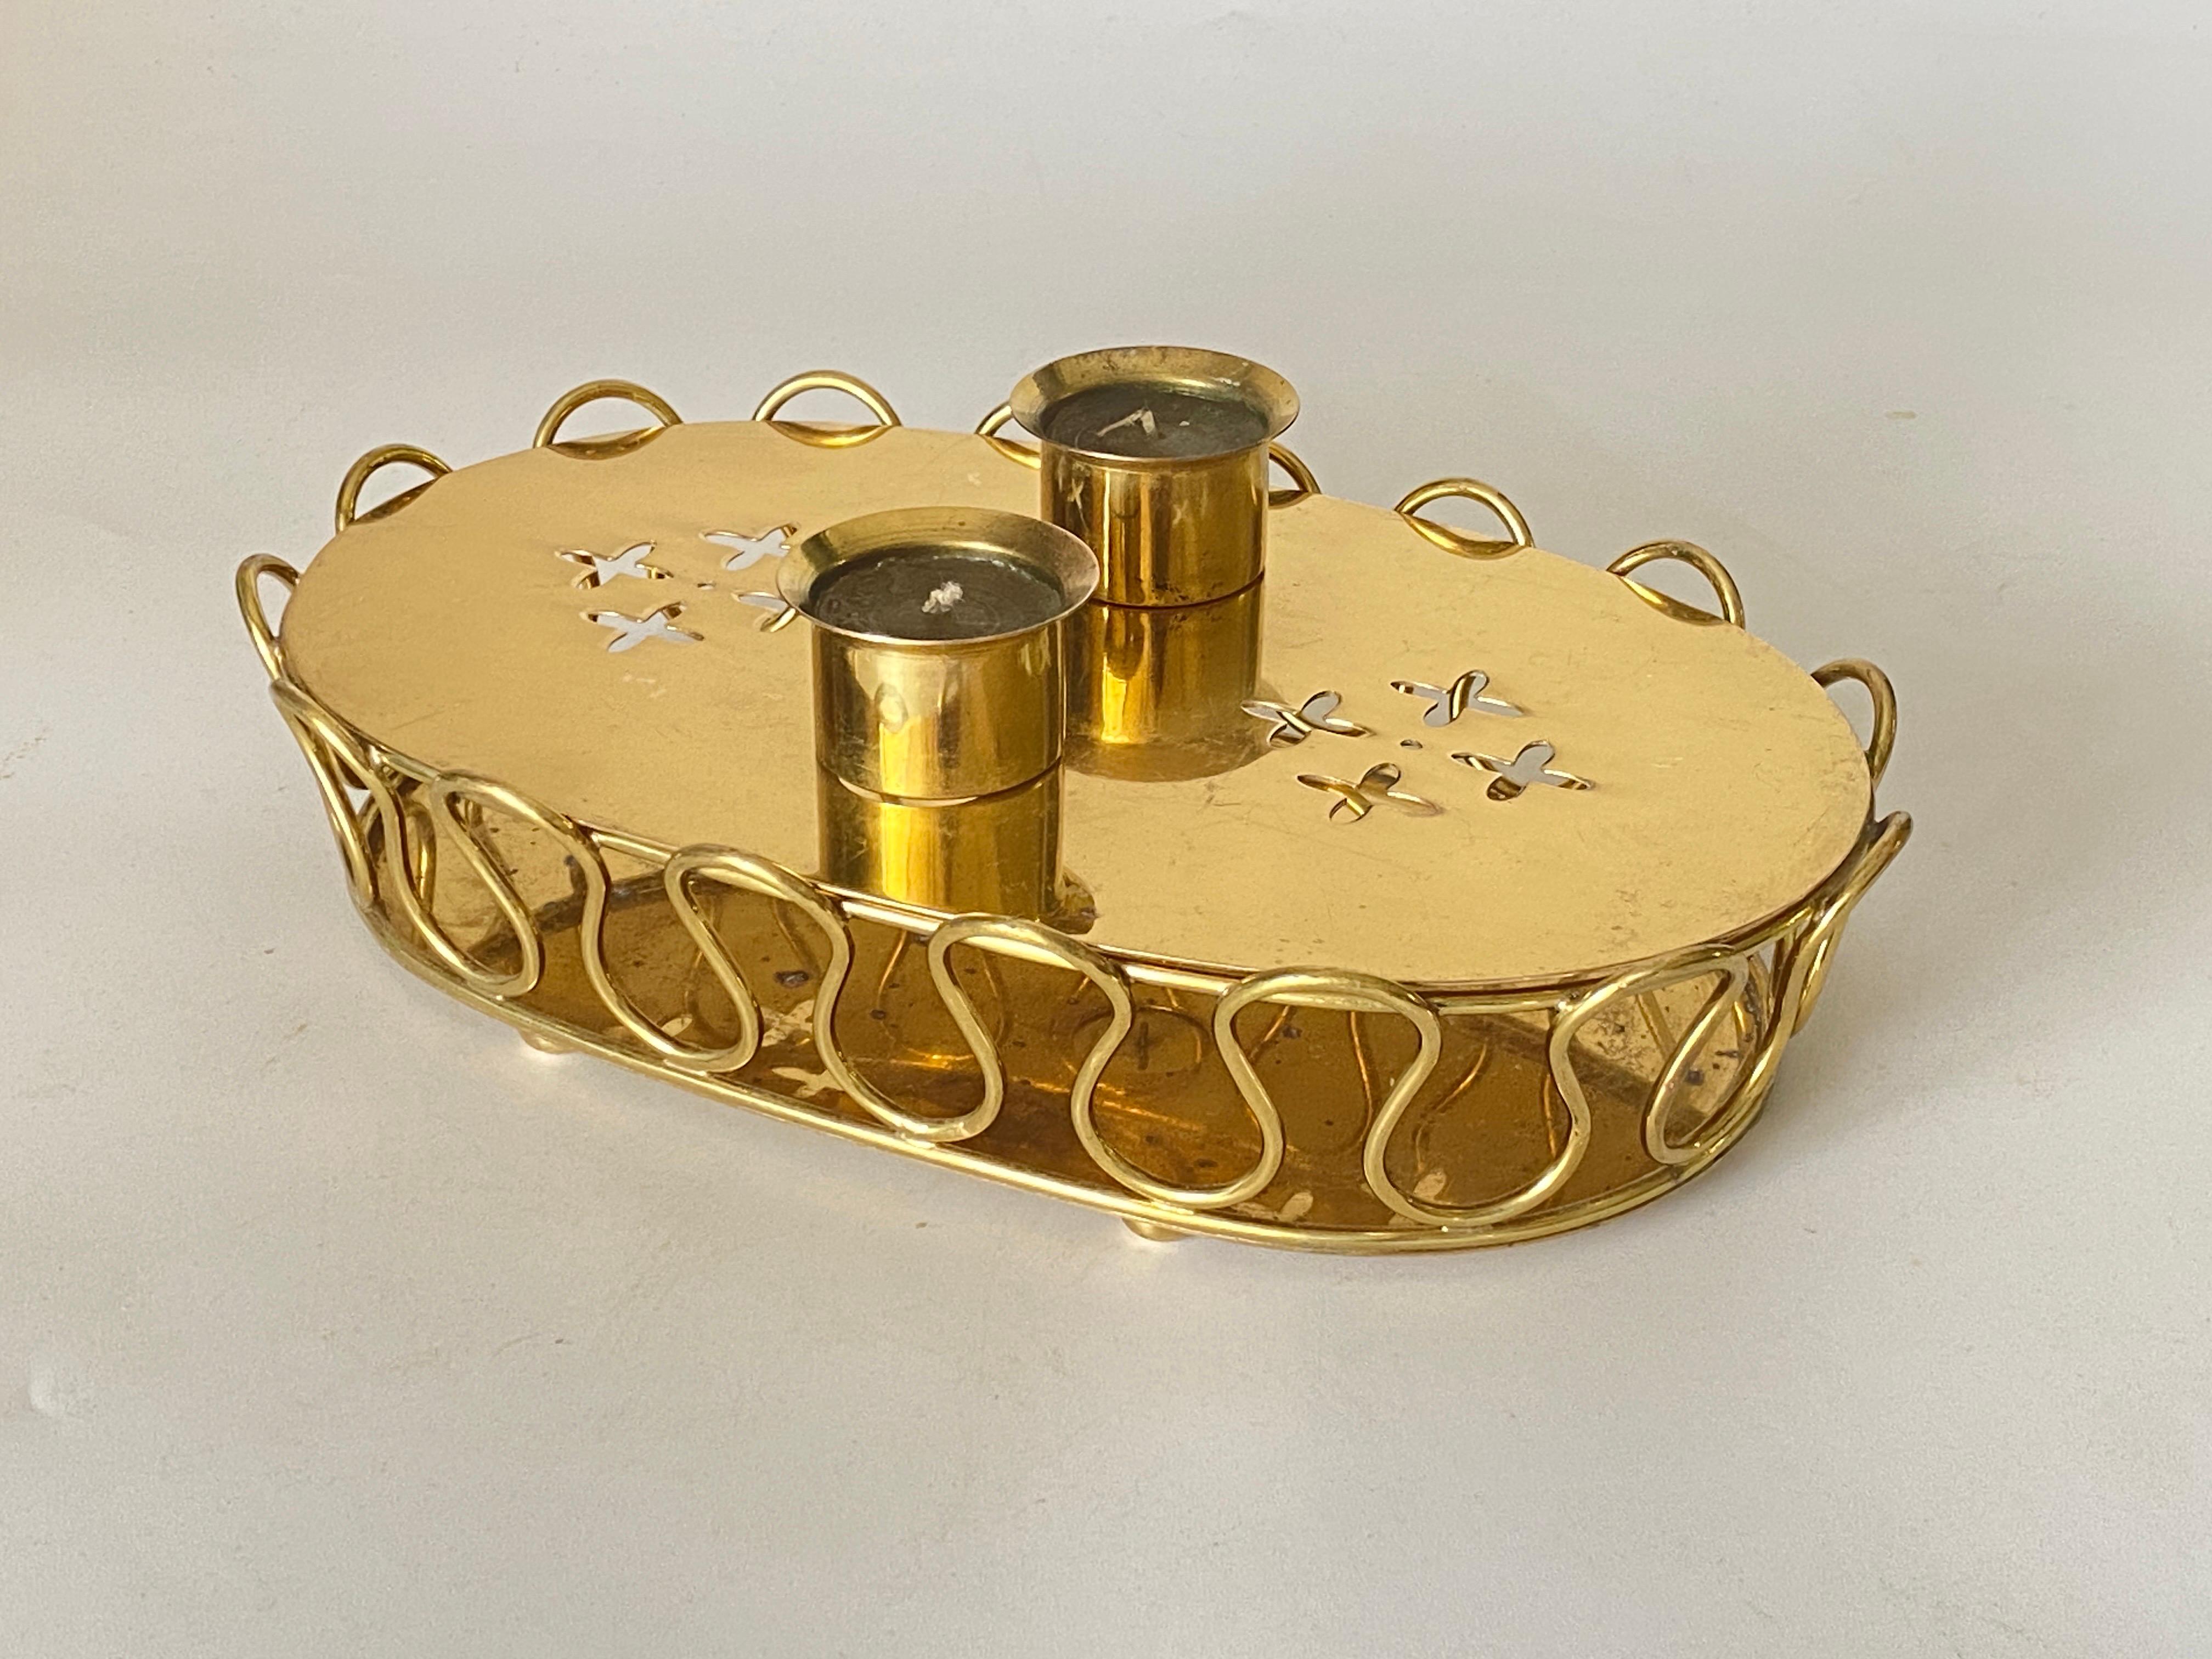 Platter in Brass, Candle Holder, Gold Color, by Josef Frank, 1940 For Sale 5